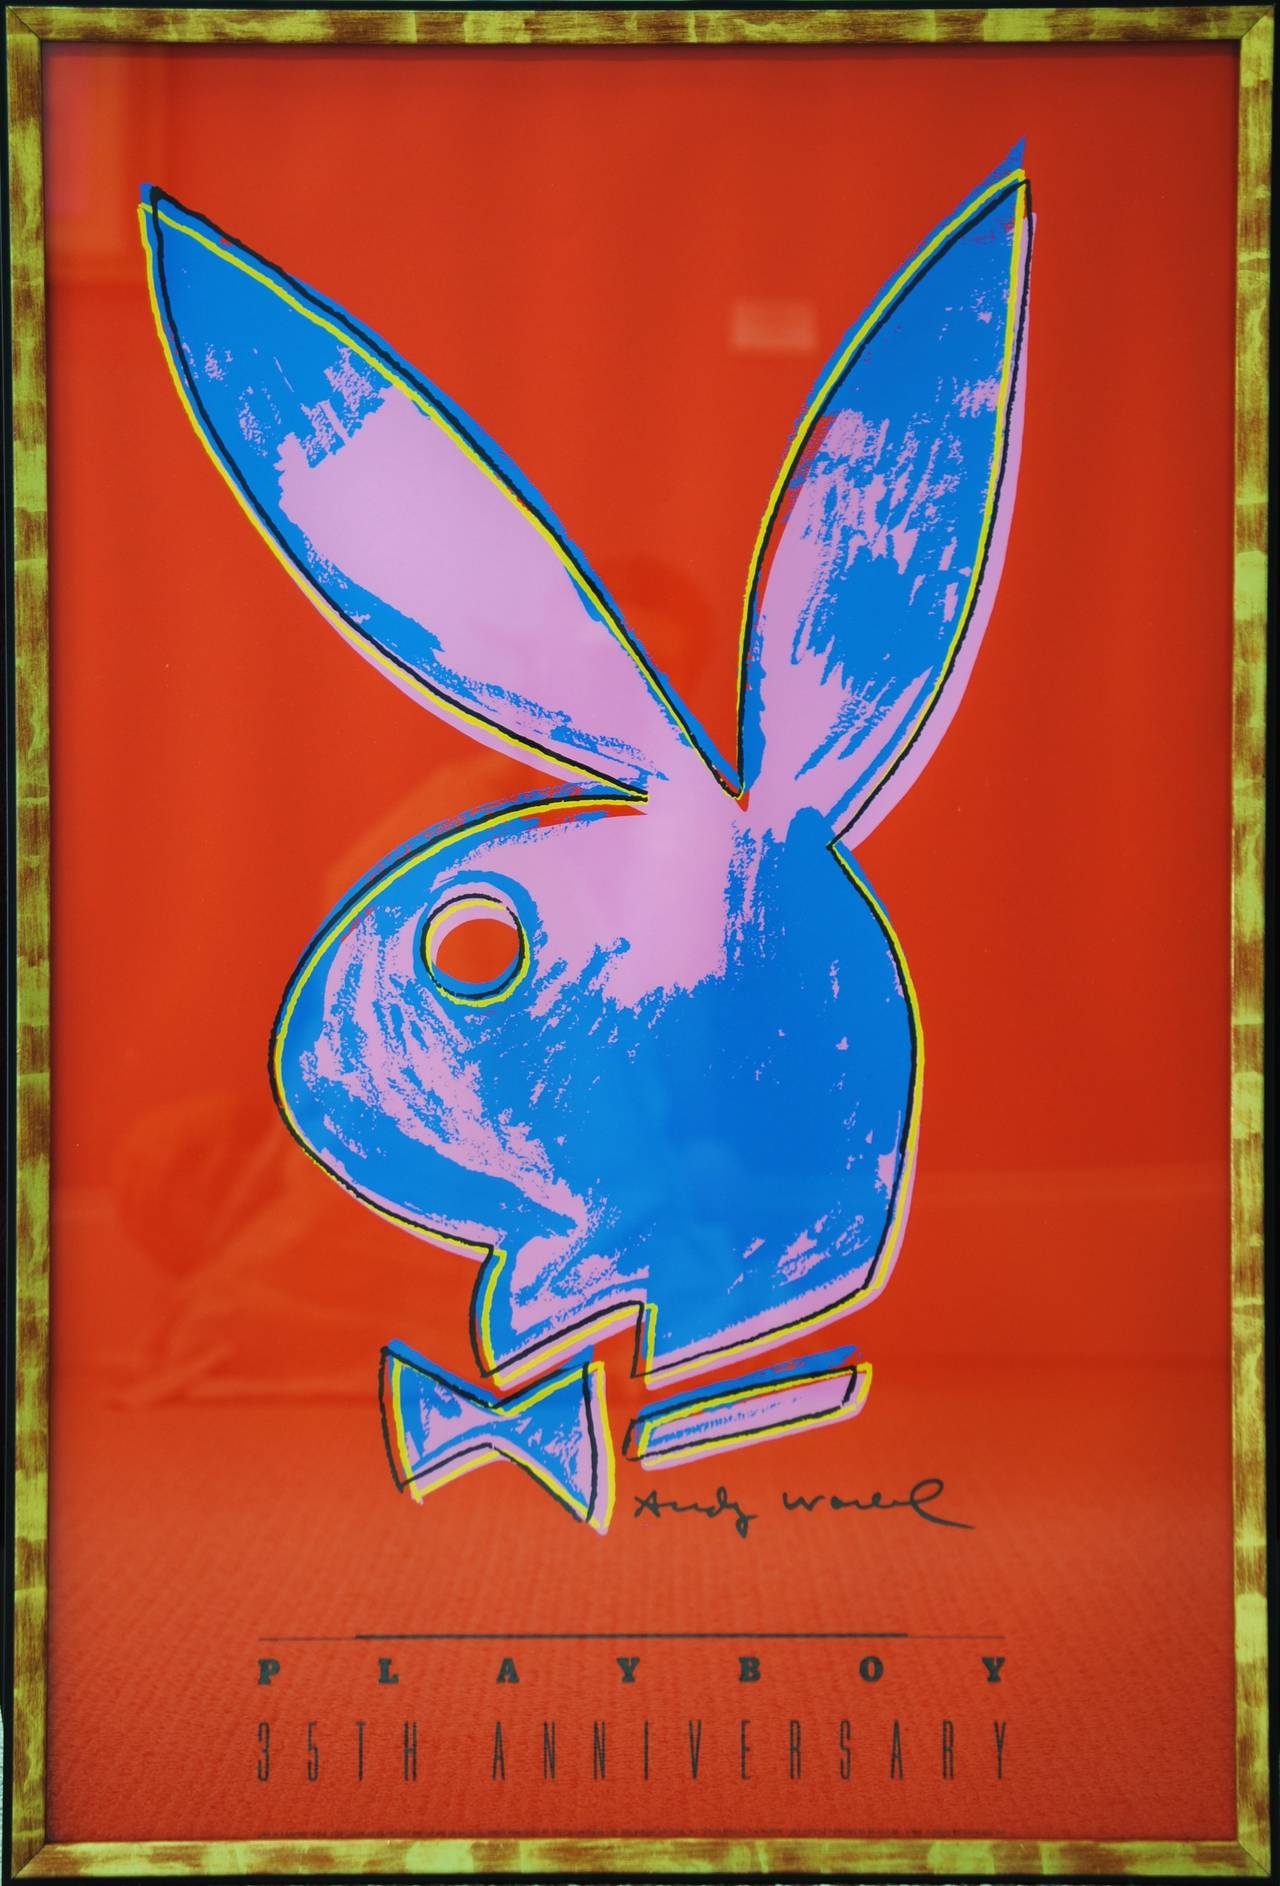 Playboy 35th Anniversary - Print by Andy Warhol